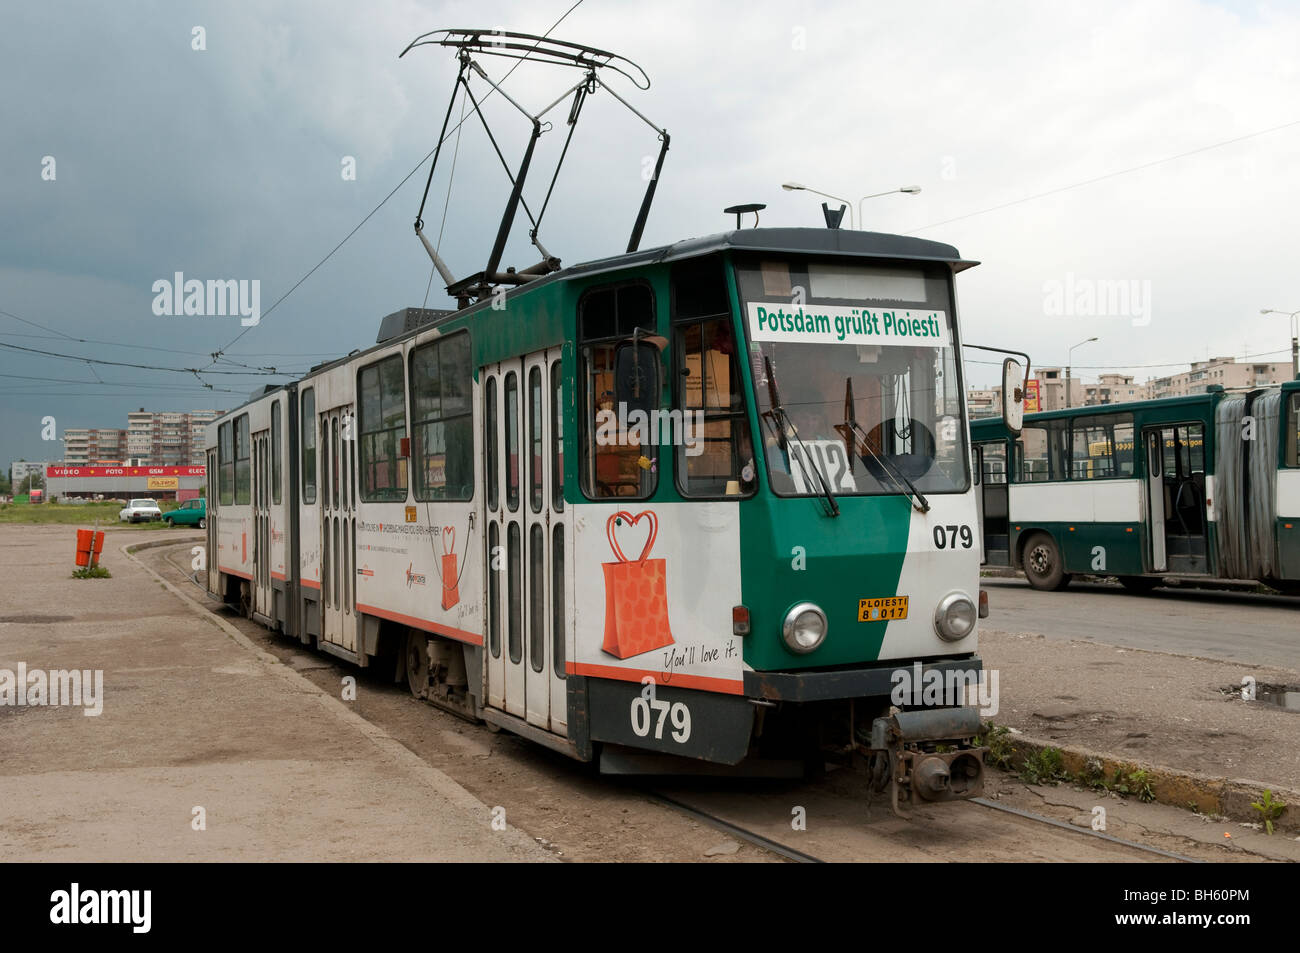 Public Tram at train station in Ploiesti Prahova Romania Eastern Europe Stock Photo